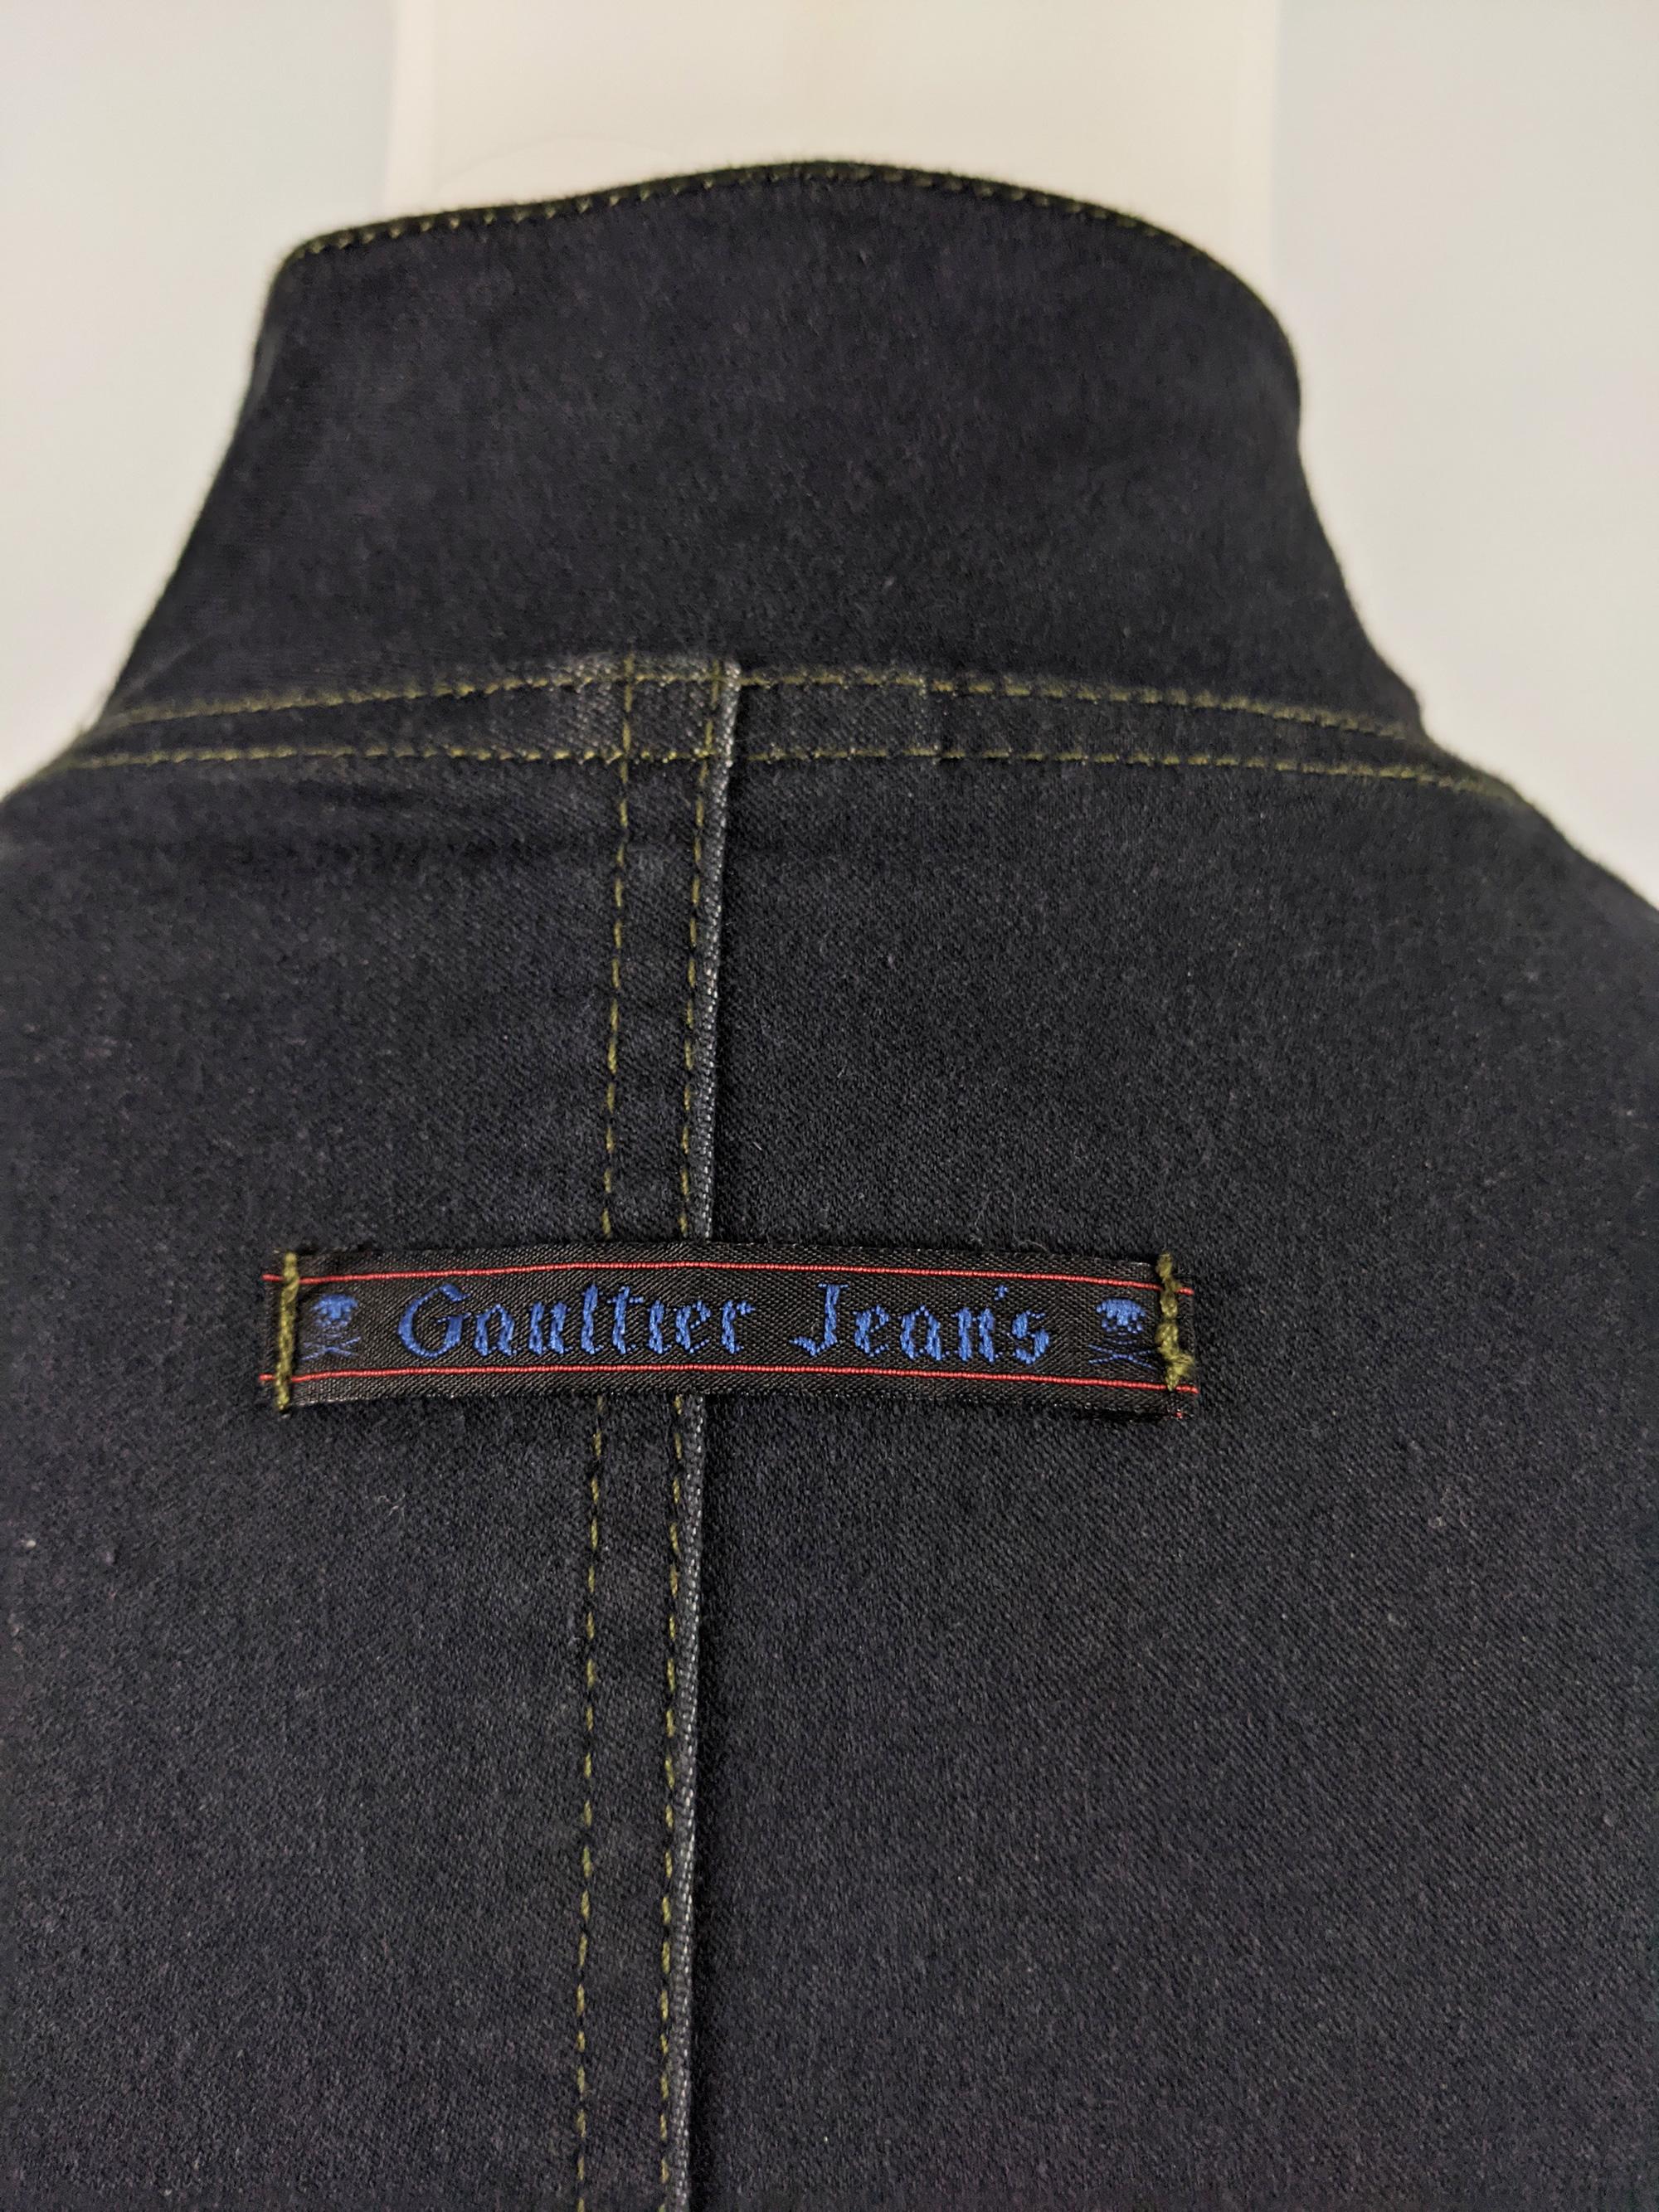 Jean Paul Gaultier Jeans Vintage Mock Neck Stretch Denim Minimalist Dress, 1990s For Sale 4